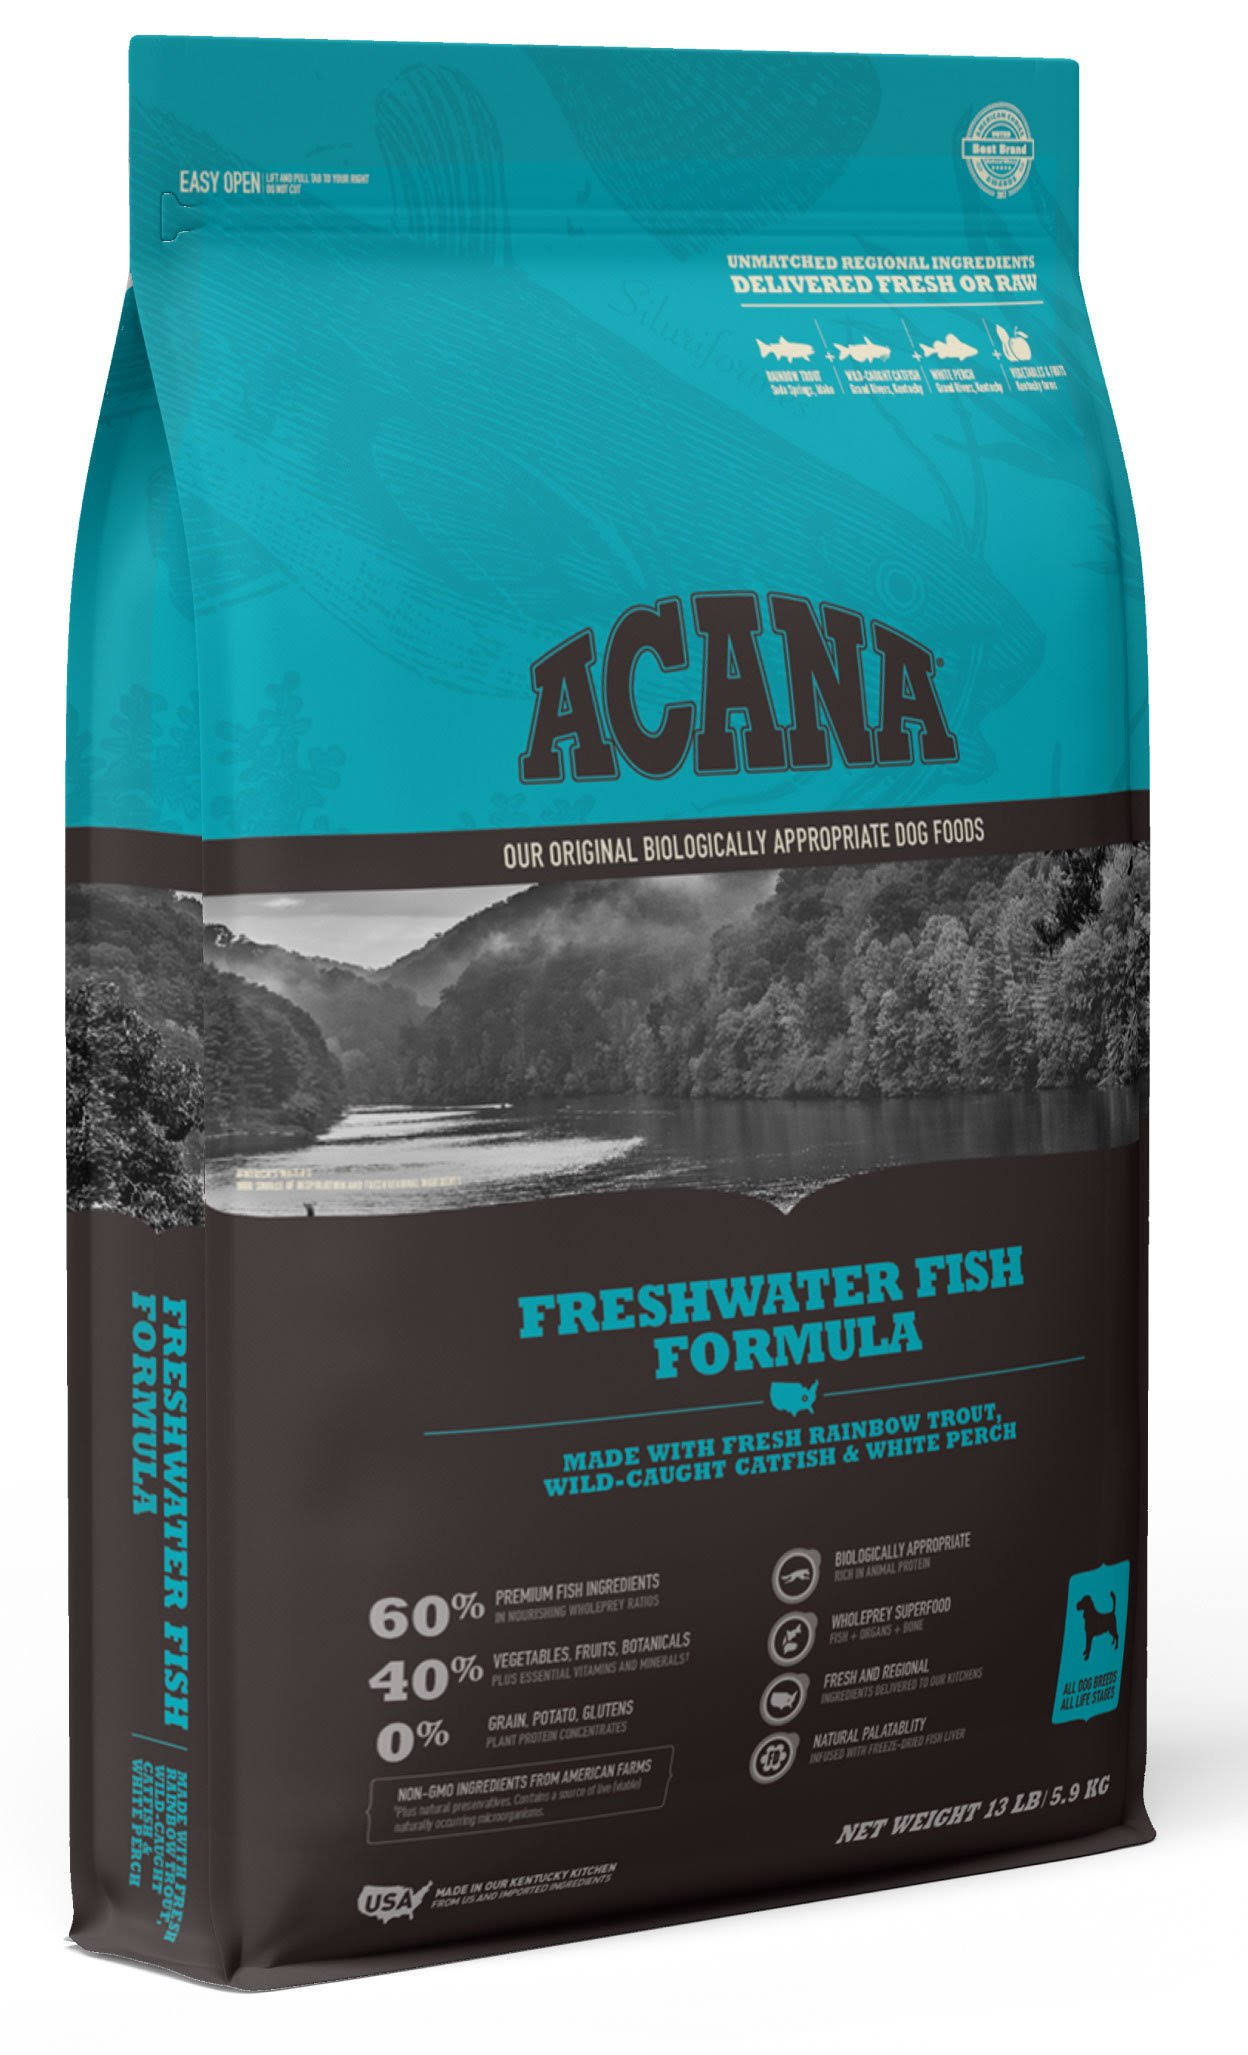 Acana Freshwater Fish Formula Grain-Free Dry Dog Food 25 LB